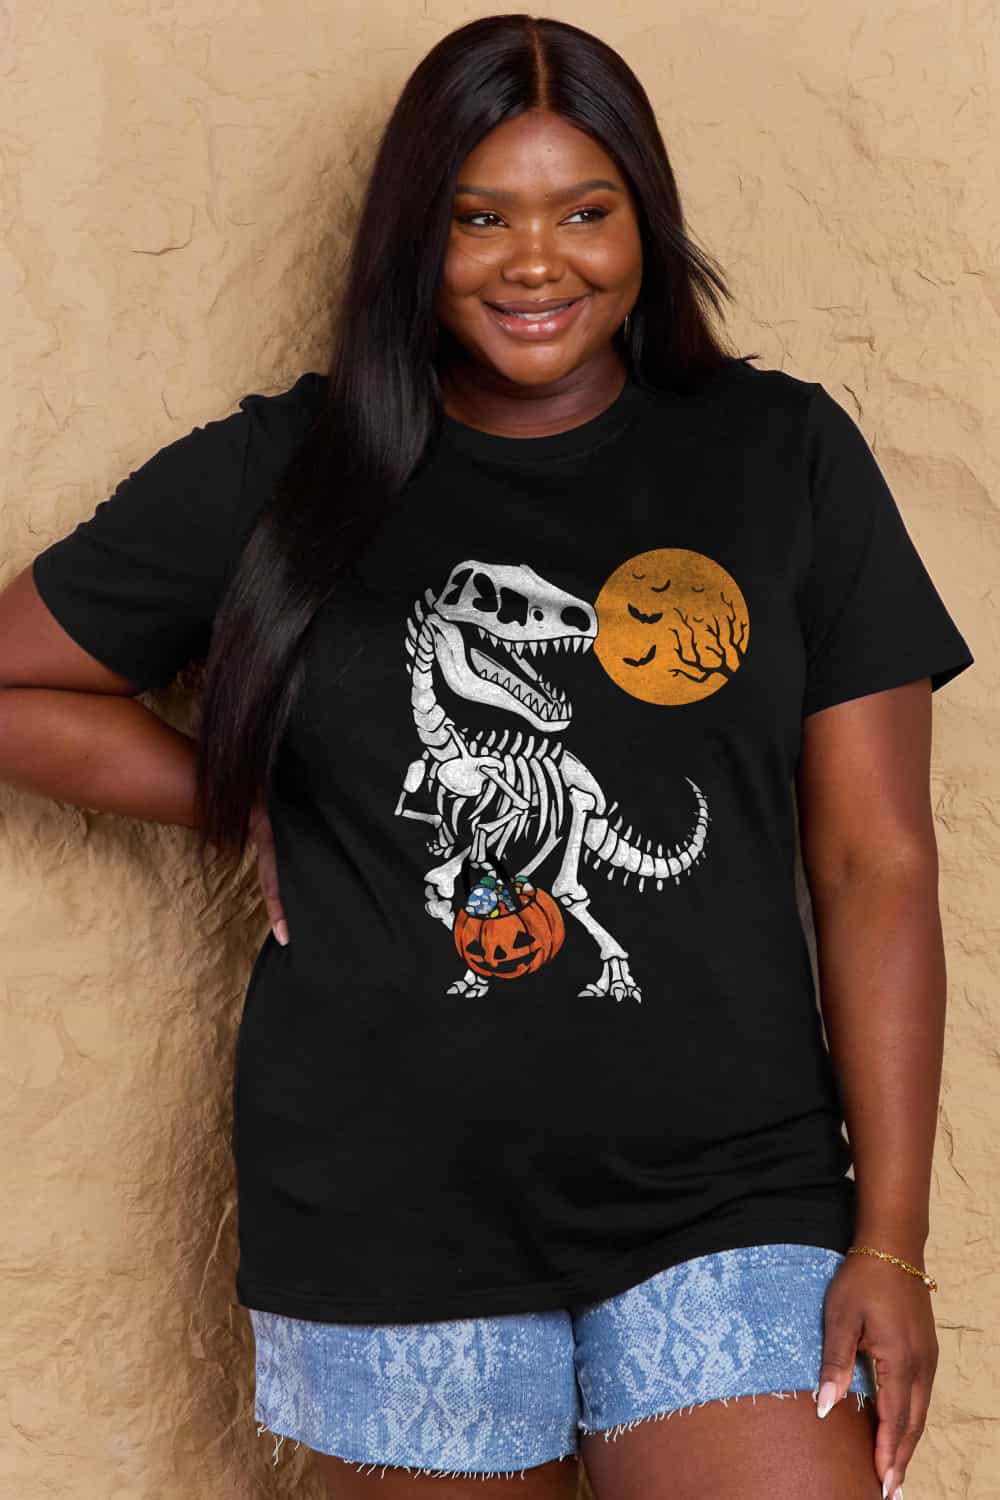 Full Size Dinosaur Skeleton Graphic Cotton T-Shirt